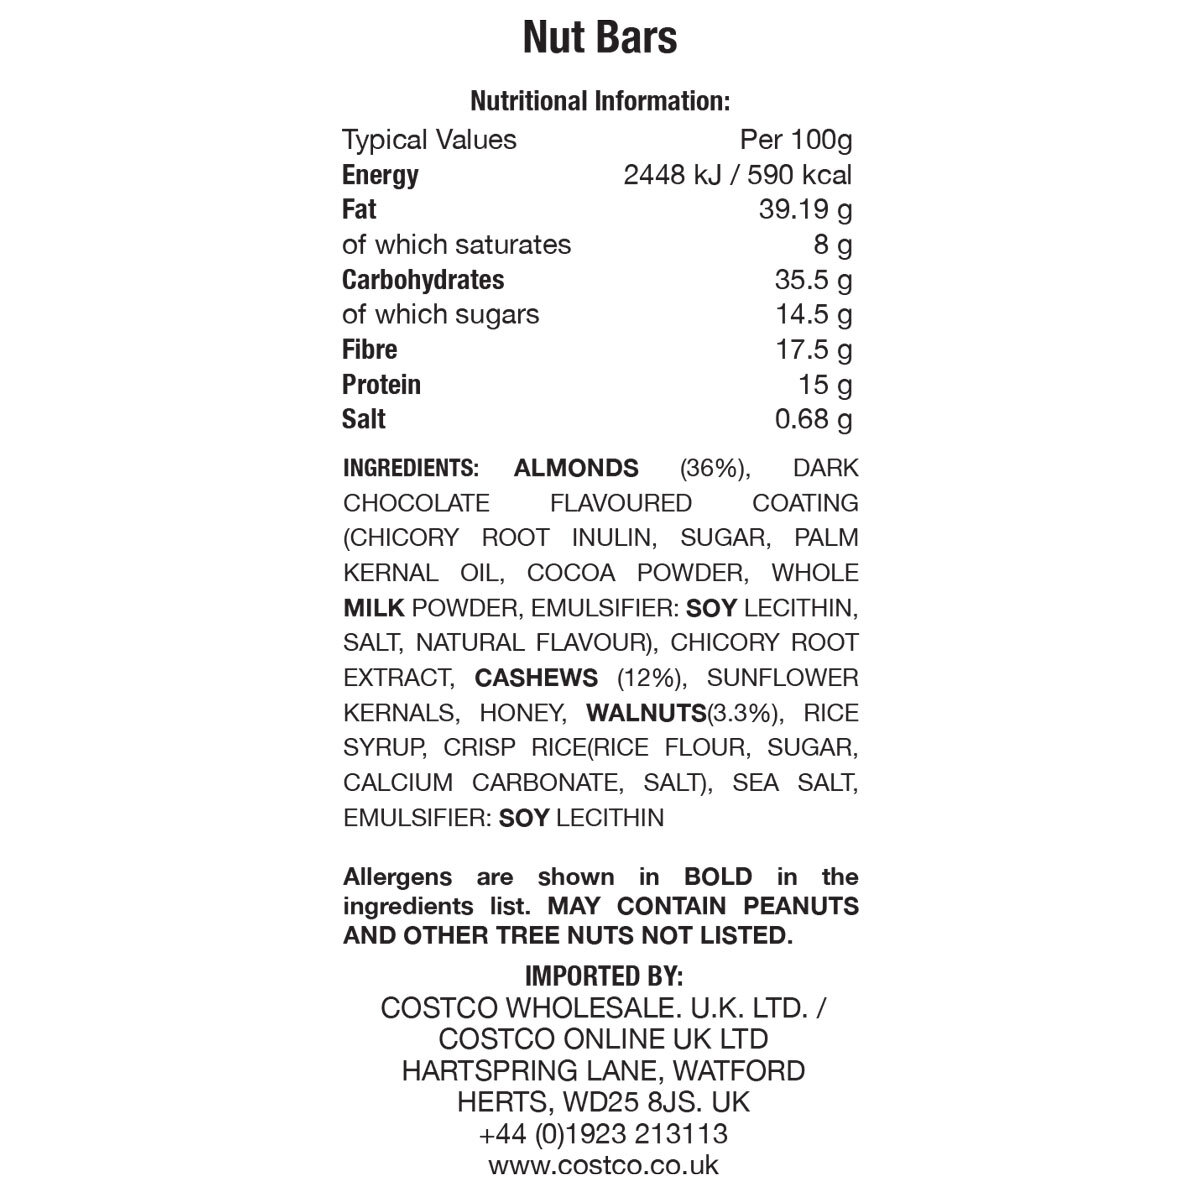 Kirkland Signature Nut Bars with Cocoa Drizzle and Sea Salt, 24 x 40g